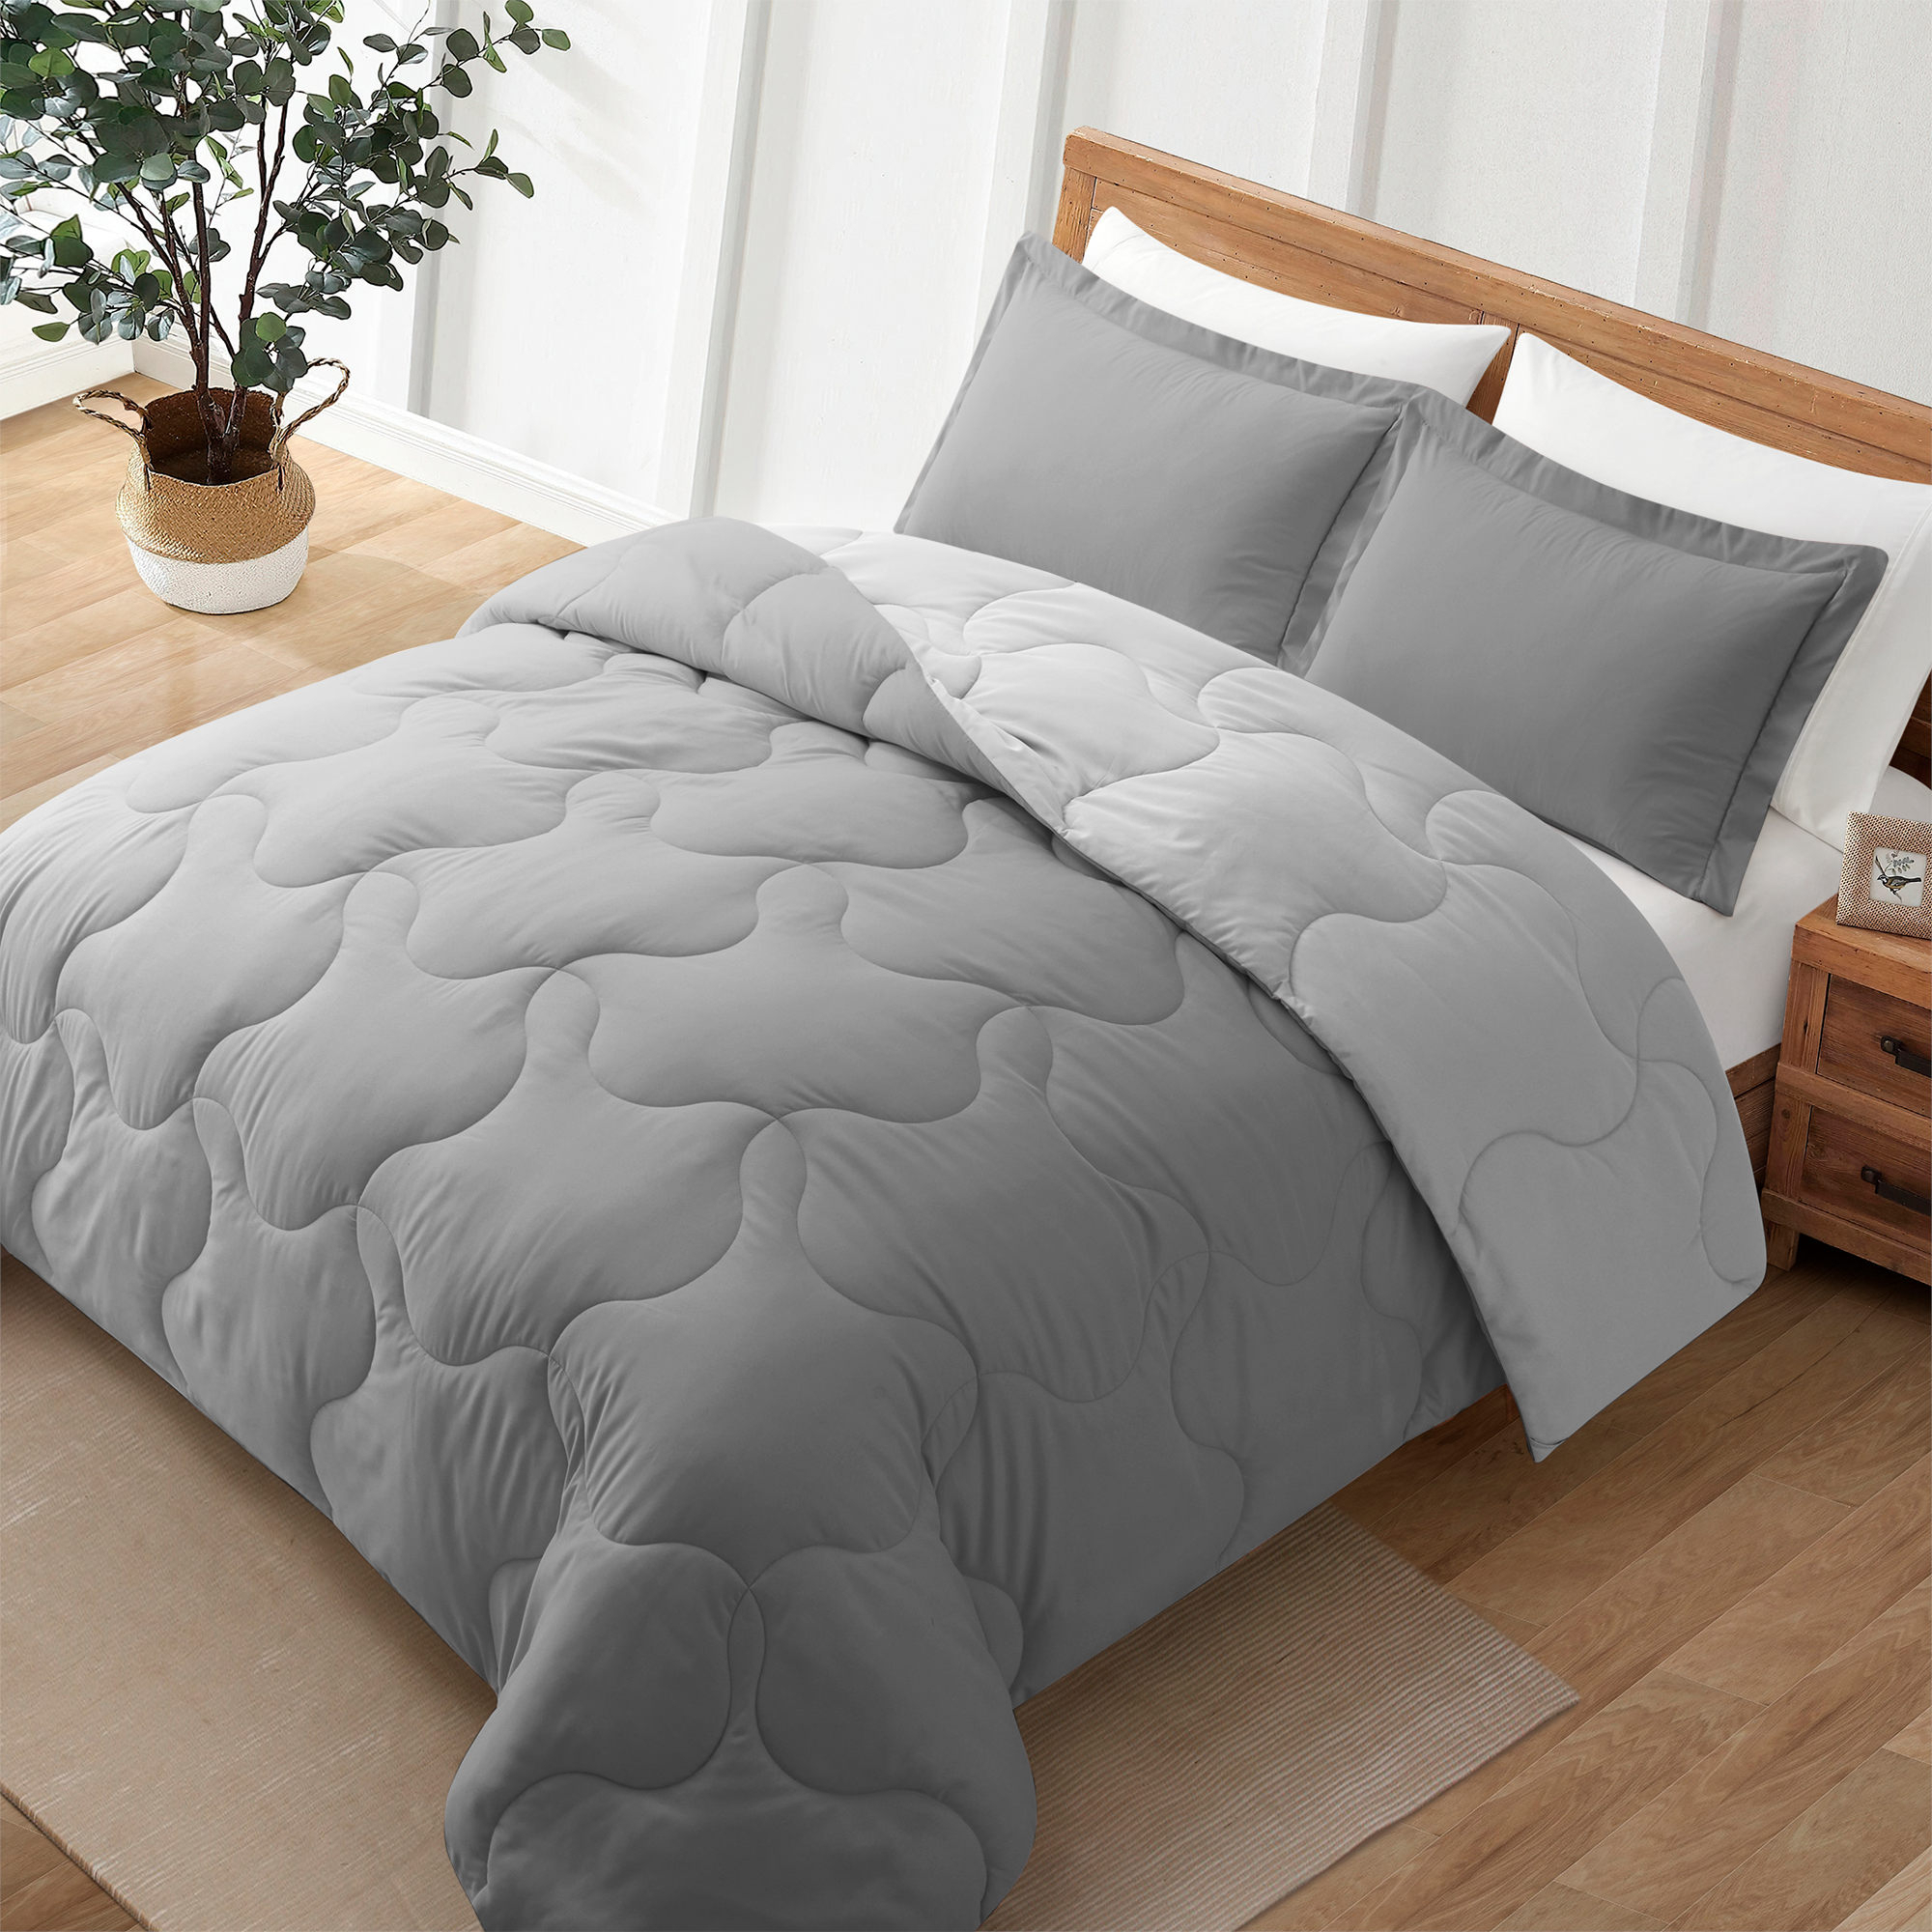 3 Or 2 Pieces Lightweight Reversible Comforter Set With Pillow Shams - Dark Grey/Light Grey, Full/Queen